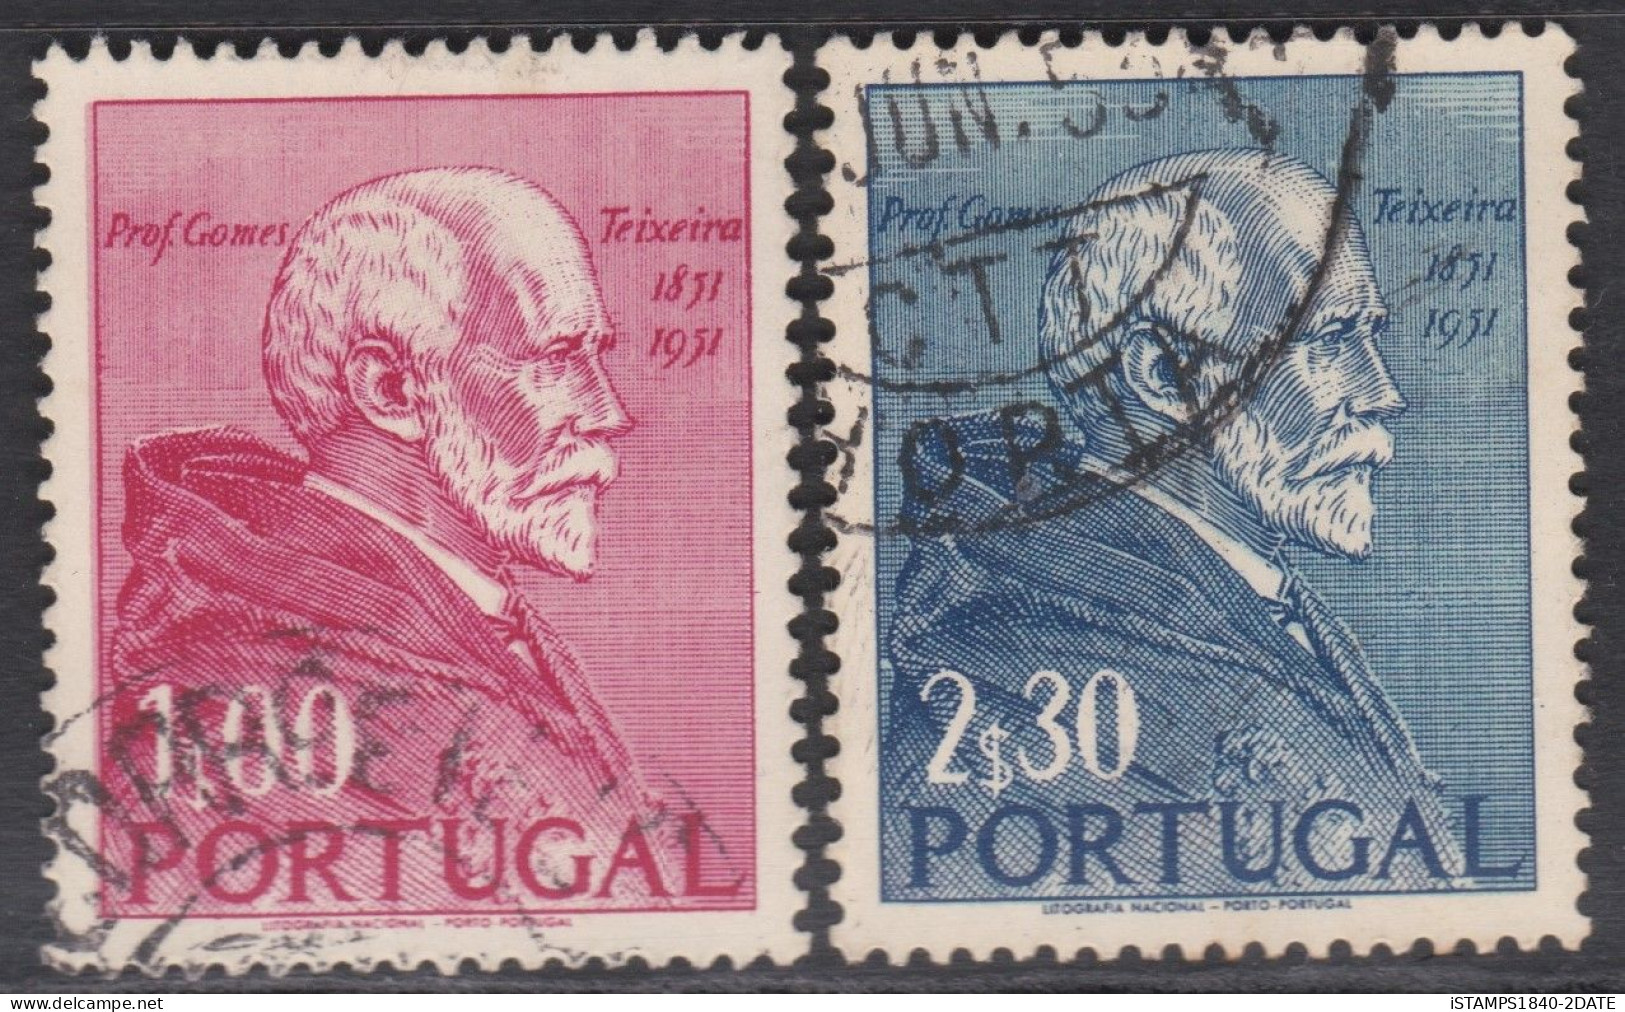 00486/ Portugal 1952 Sg1069/70 Fine Used Set Of 2 Birth Centenary Of Professor Gomes Cv £7 - Nuevos